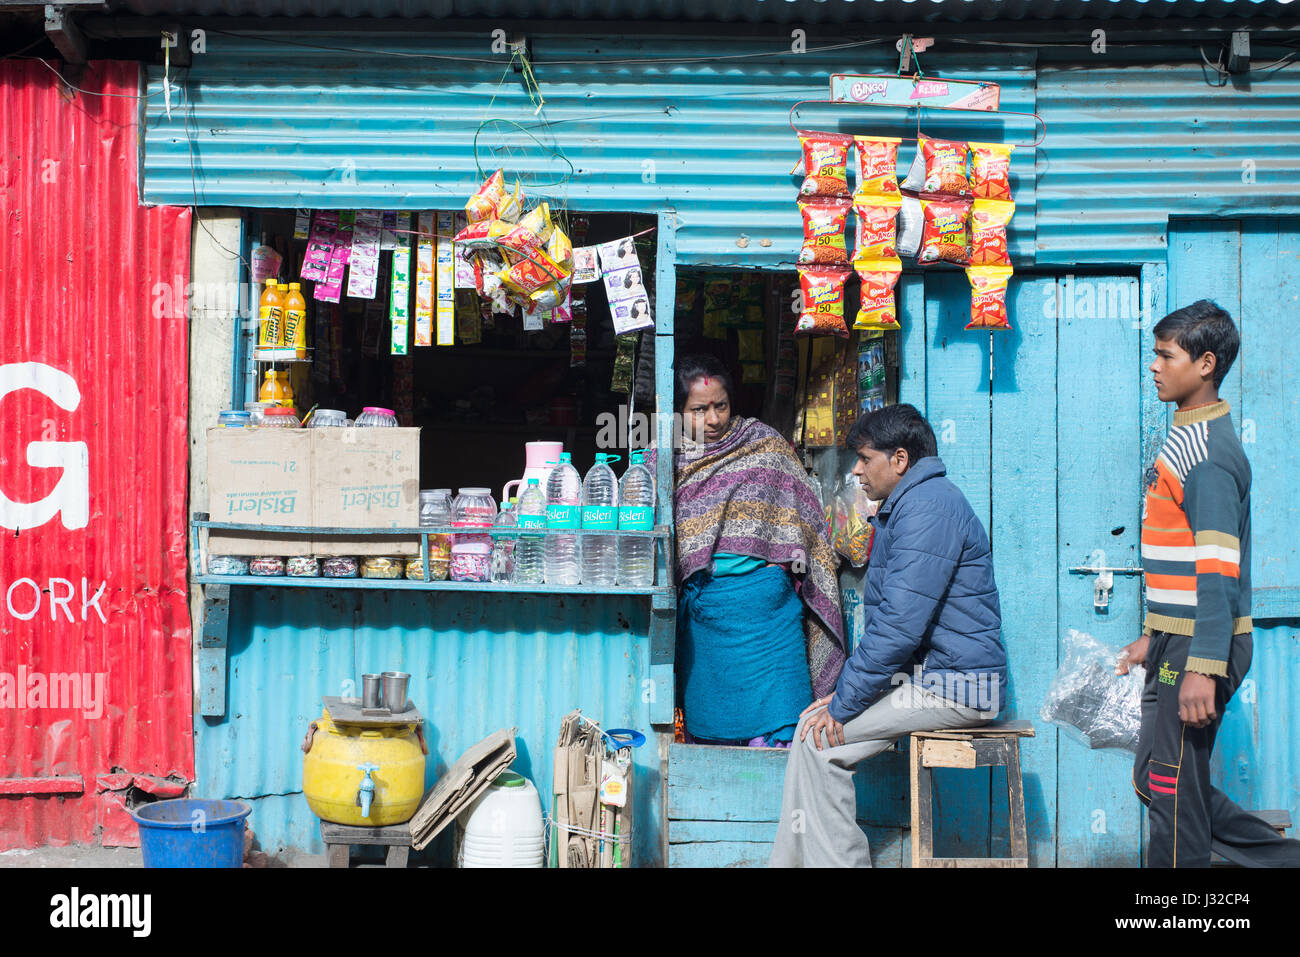 DARJEELING, INDIA - NOVEMBER 28, 2016: Local shop or stall selling snack and drink in Darjeeling, India Stock Photo